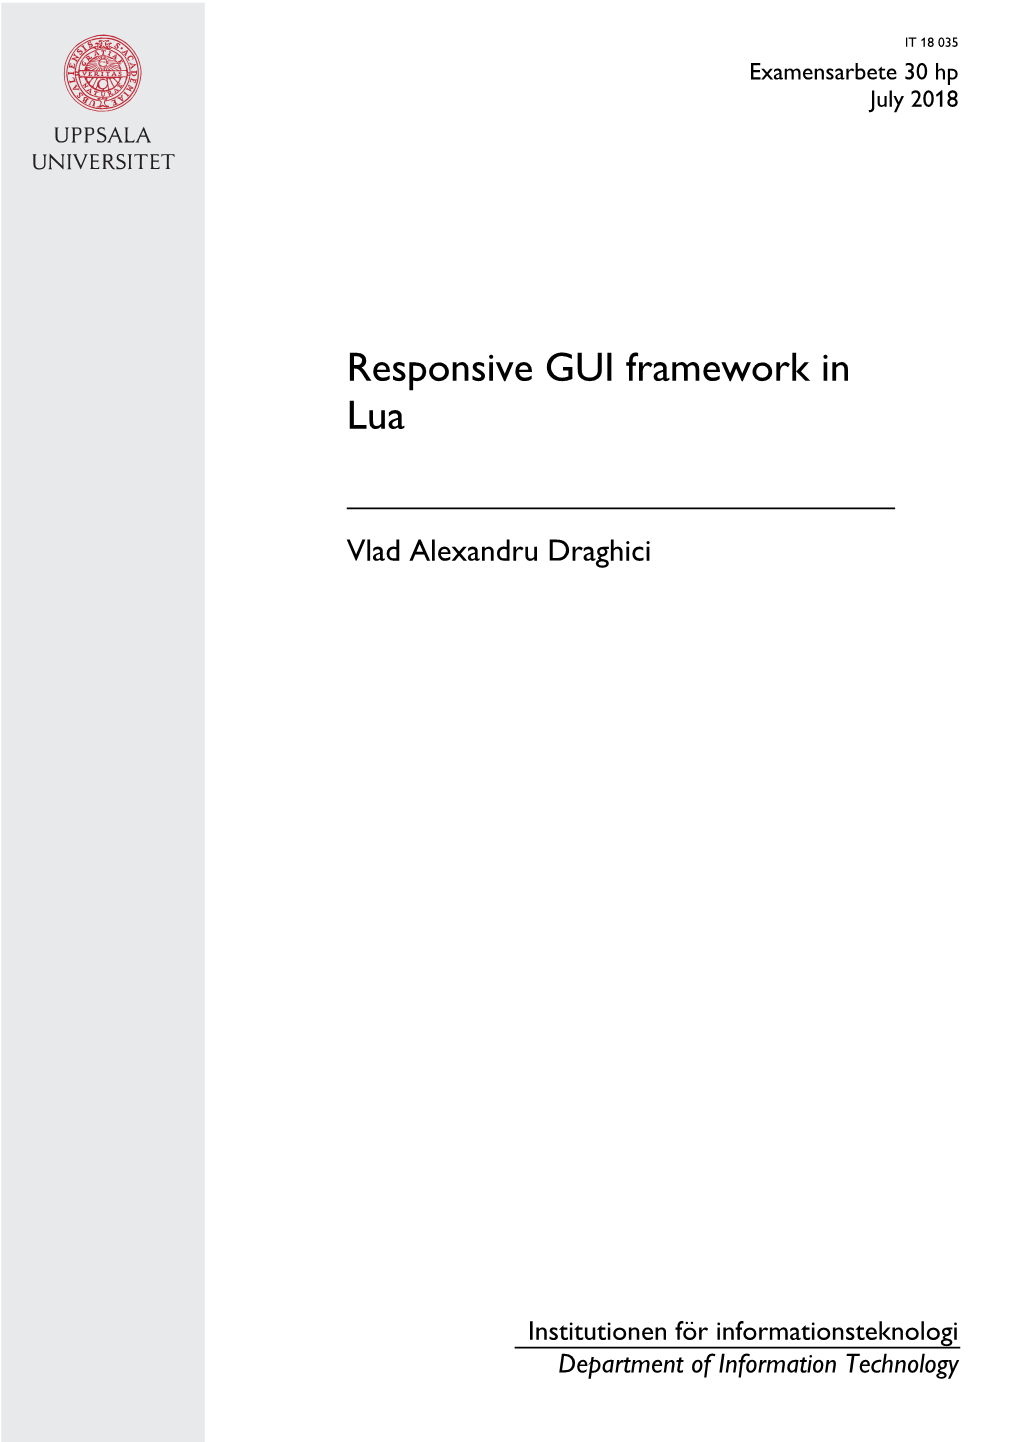 Responsive GUI Framework in Lua